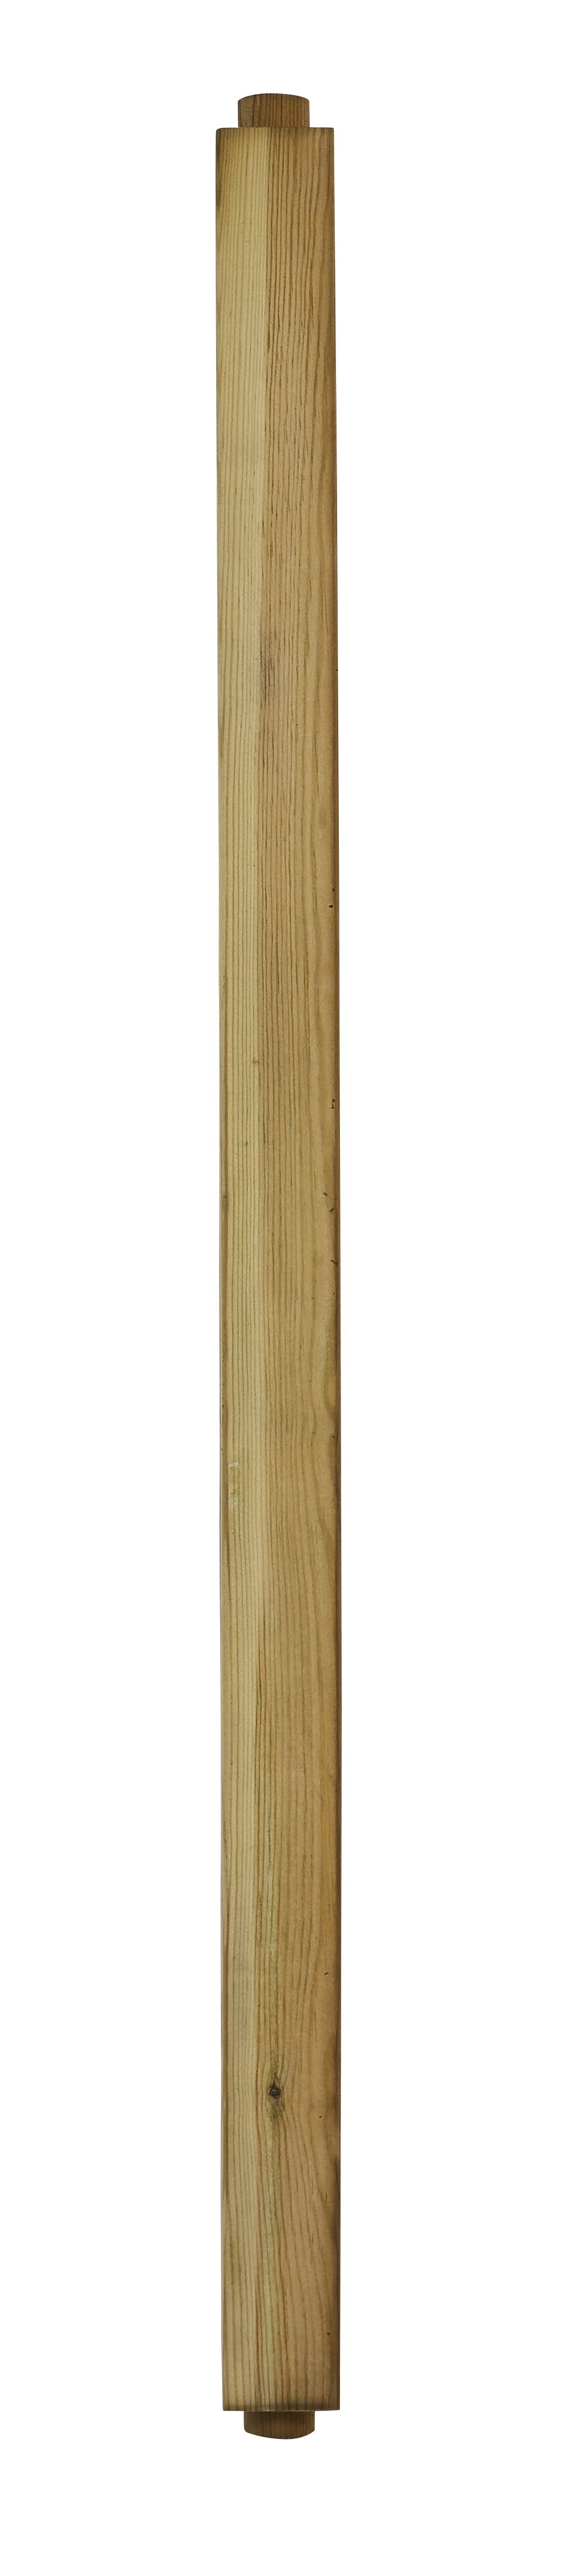 Richard Burbidge Modern Softwood Deck spindle (W)41mm (T)41mm, Pack of 10